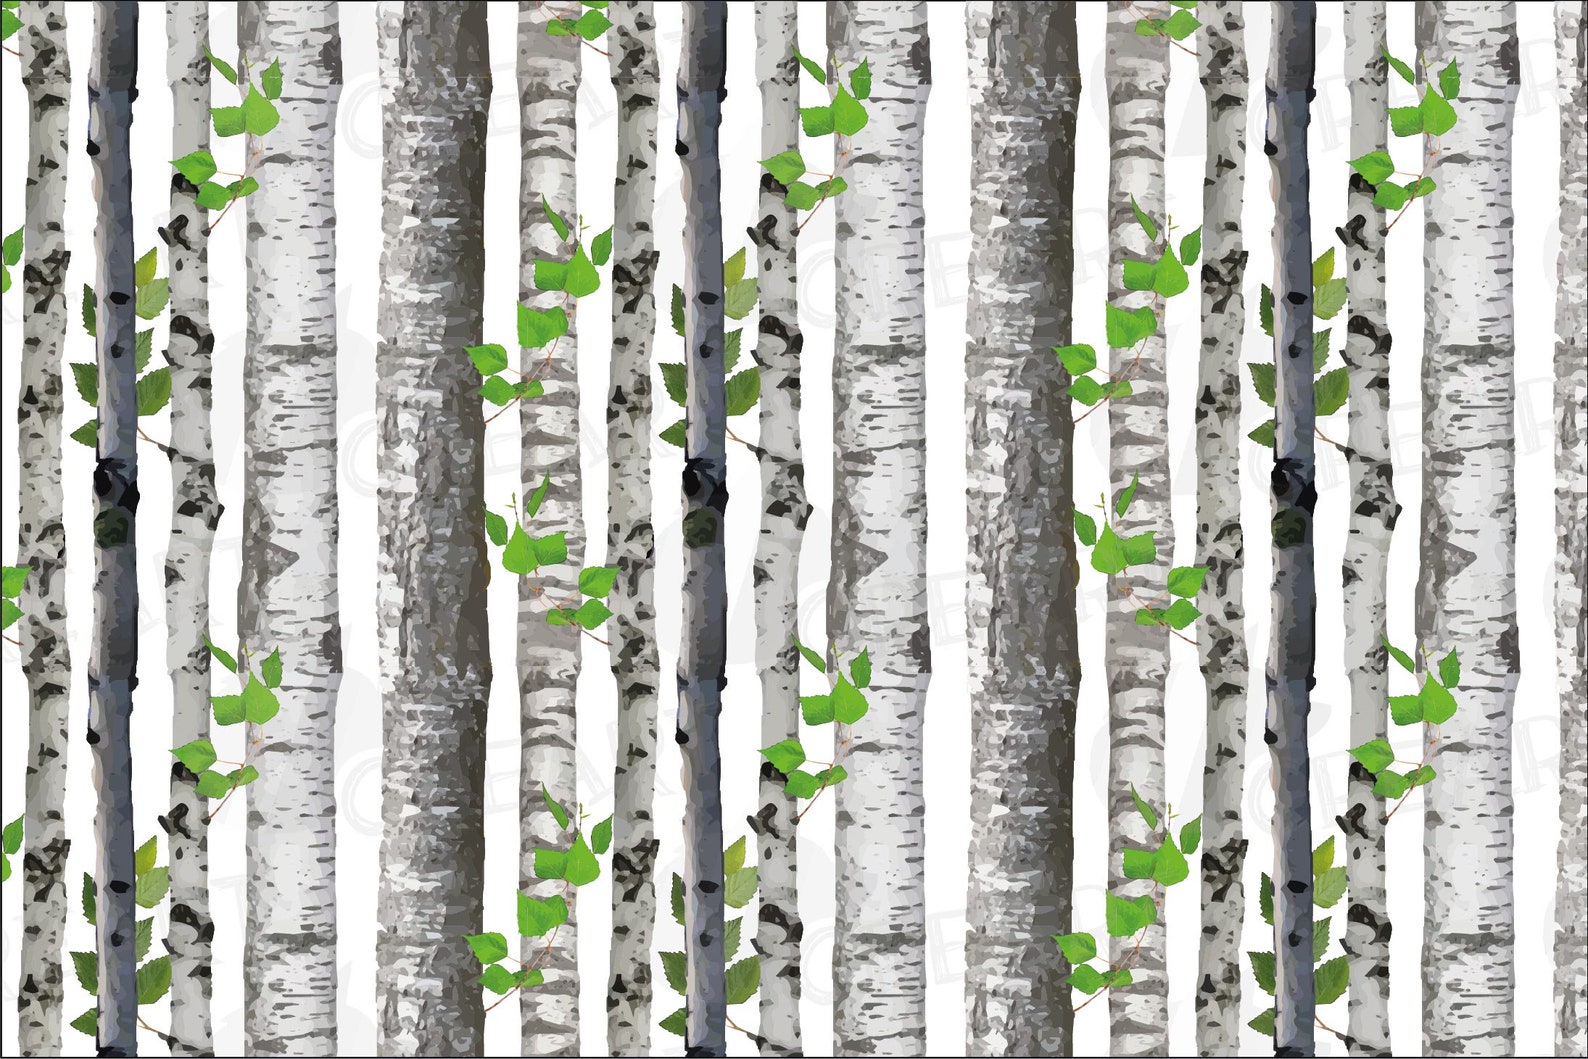 Birch trees image 0.